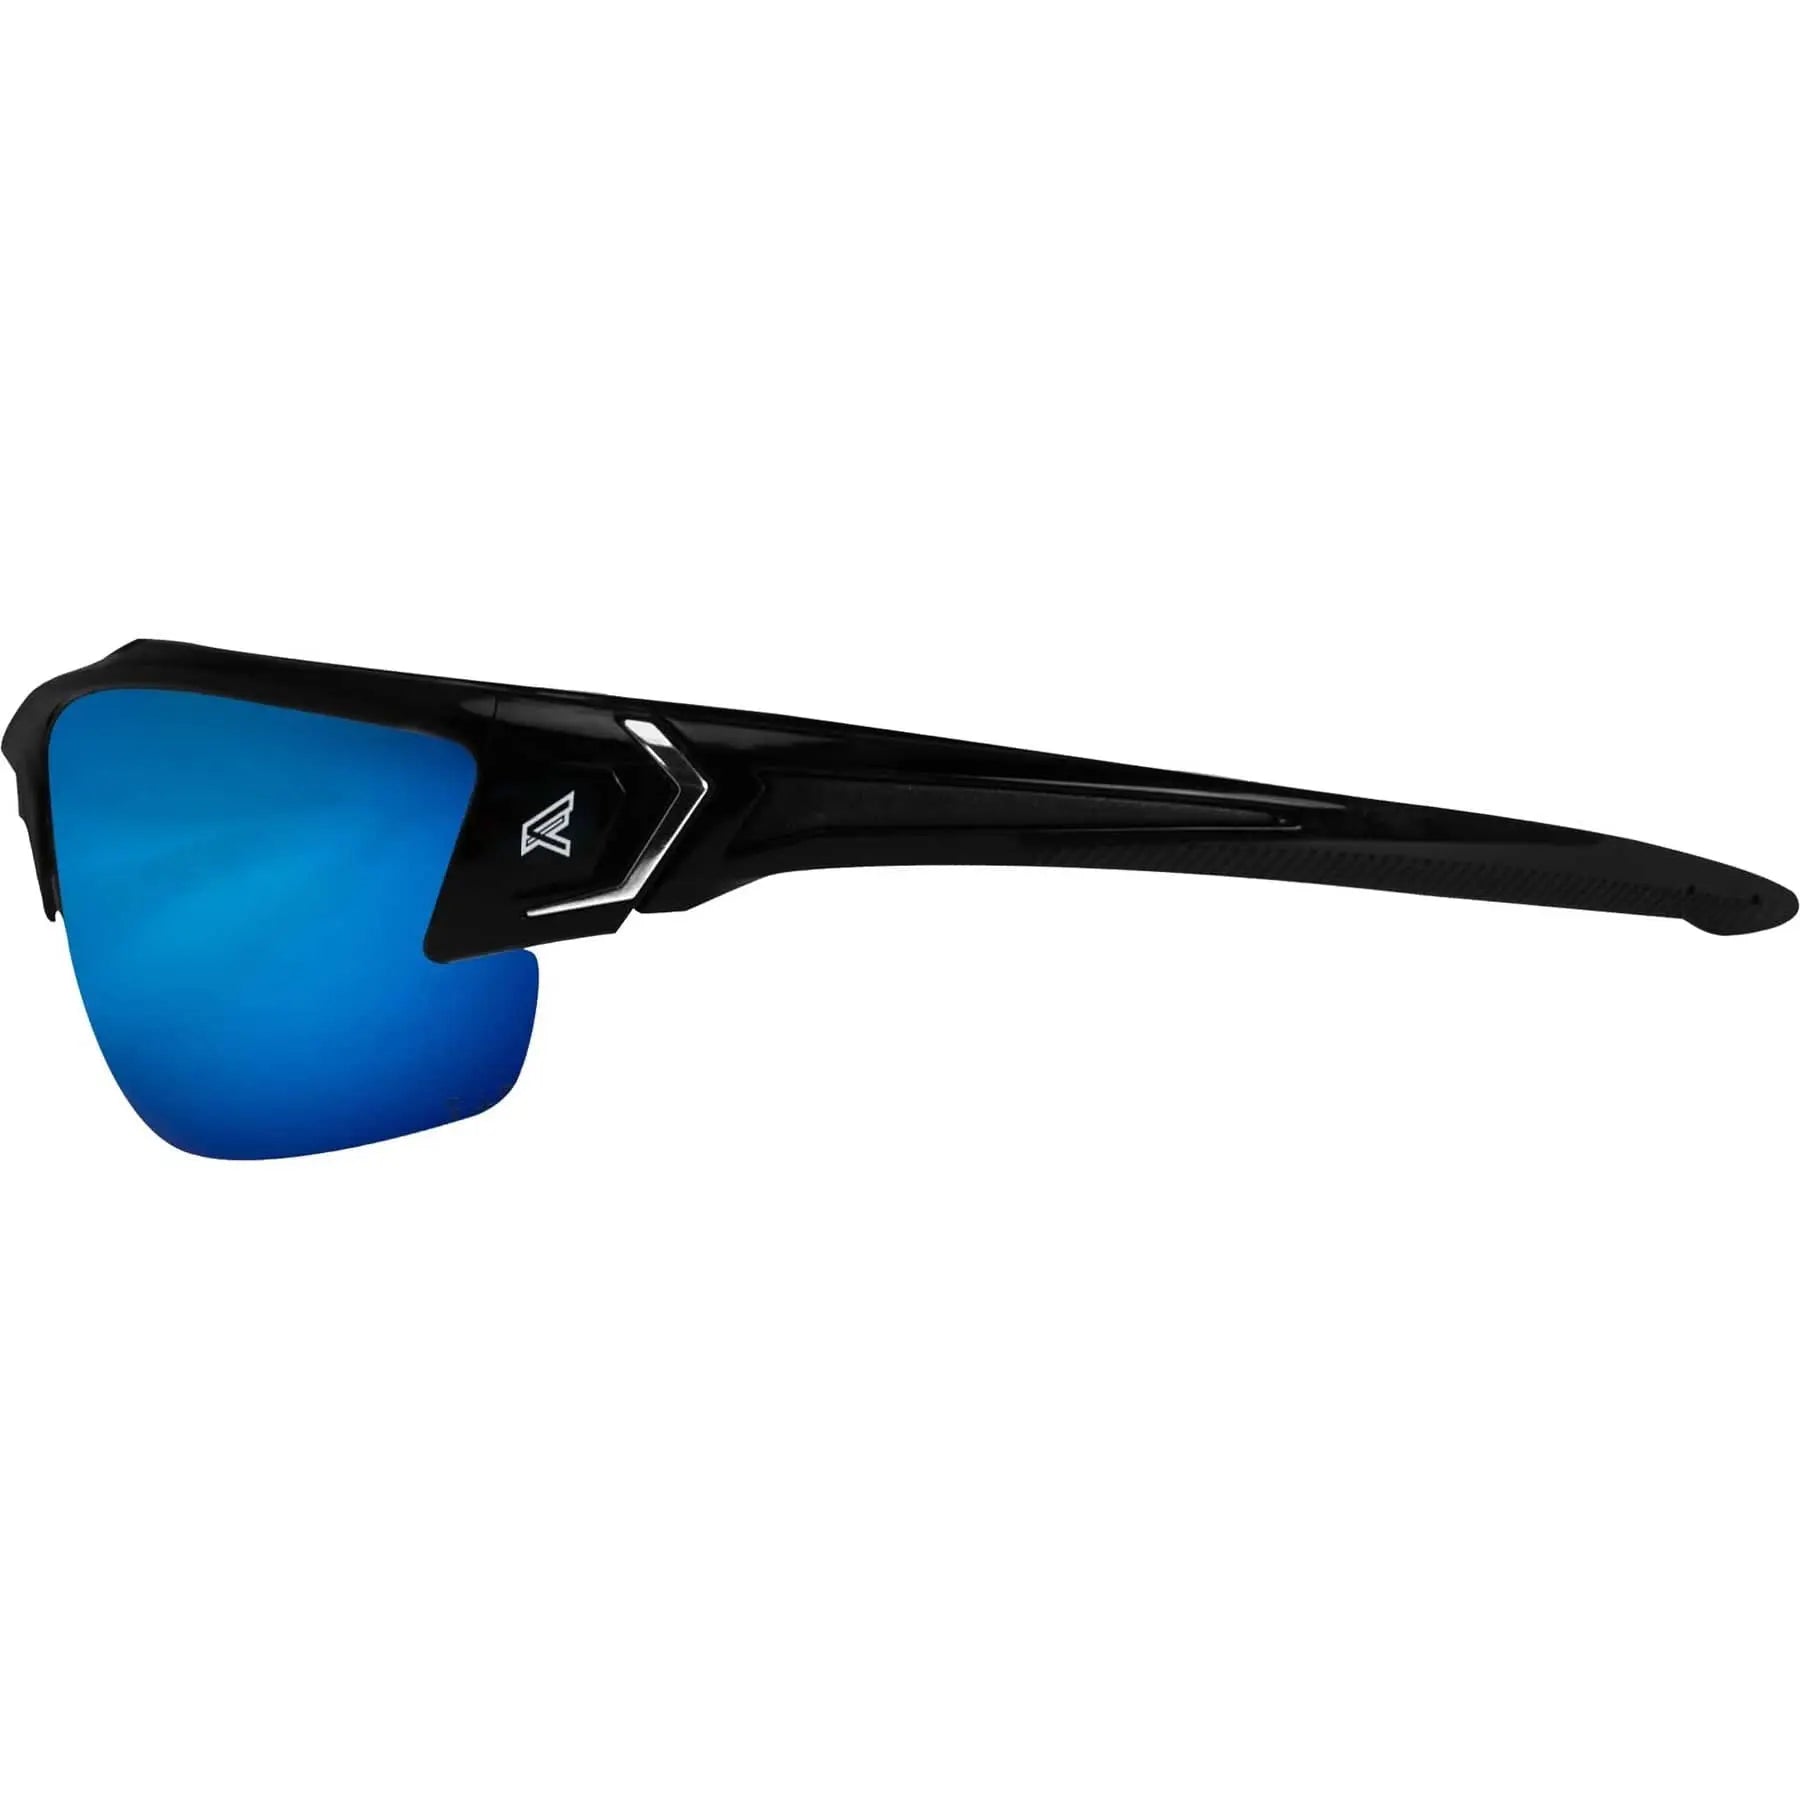 EDGE - Khor G2 Polarized Safety Glasses, Black/Aqua Precision Blue Mirror Lens - Becker Safety and Supply